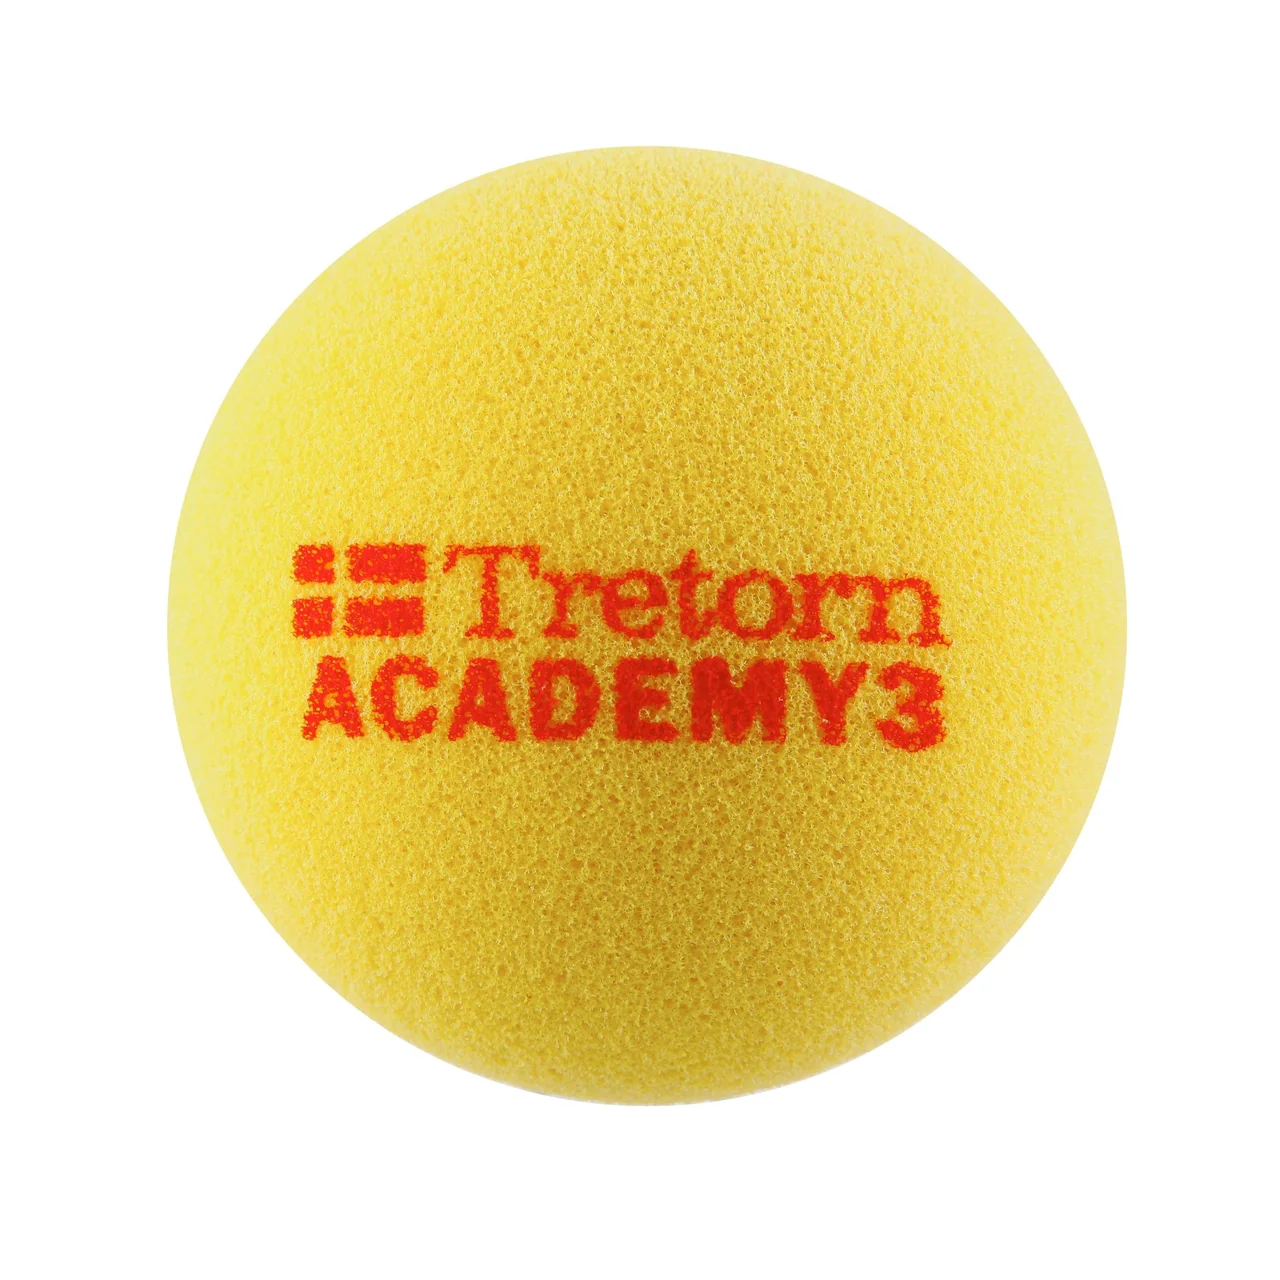 Tretorn Academy Red Foam 2-pack